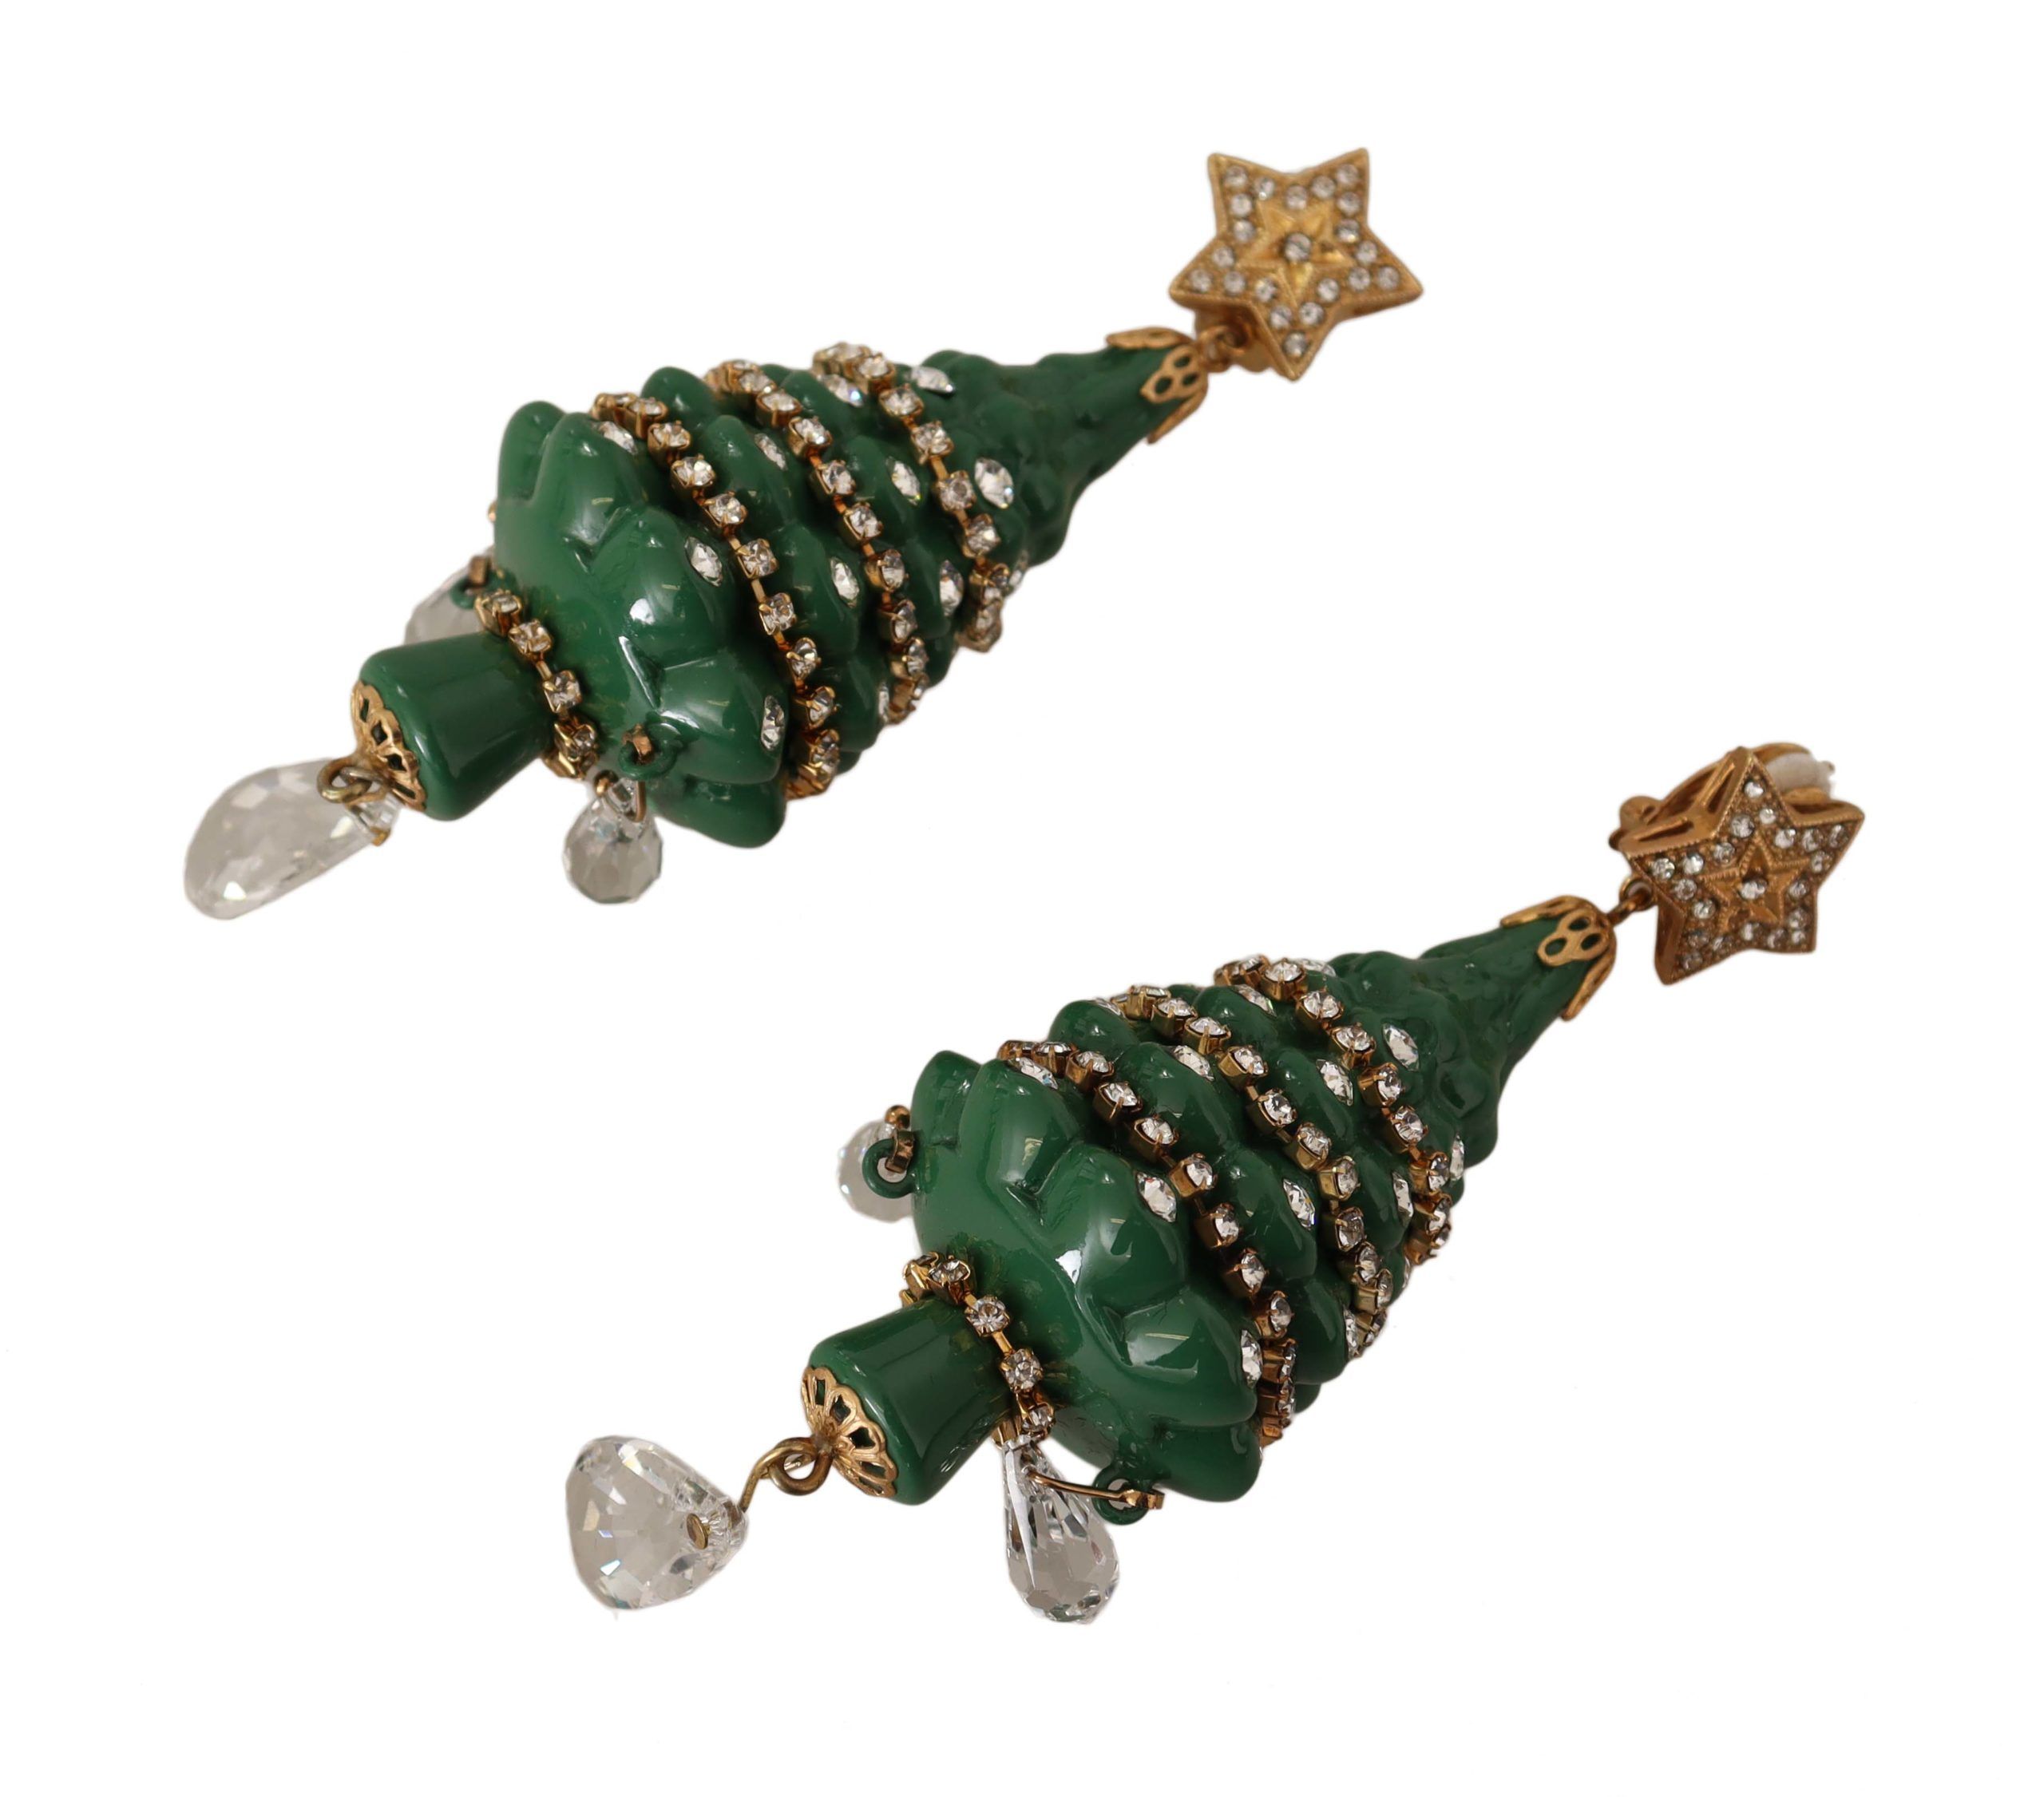 Crystal Christmas Tree Clip-On Earrings